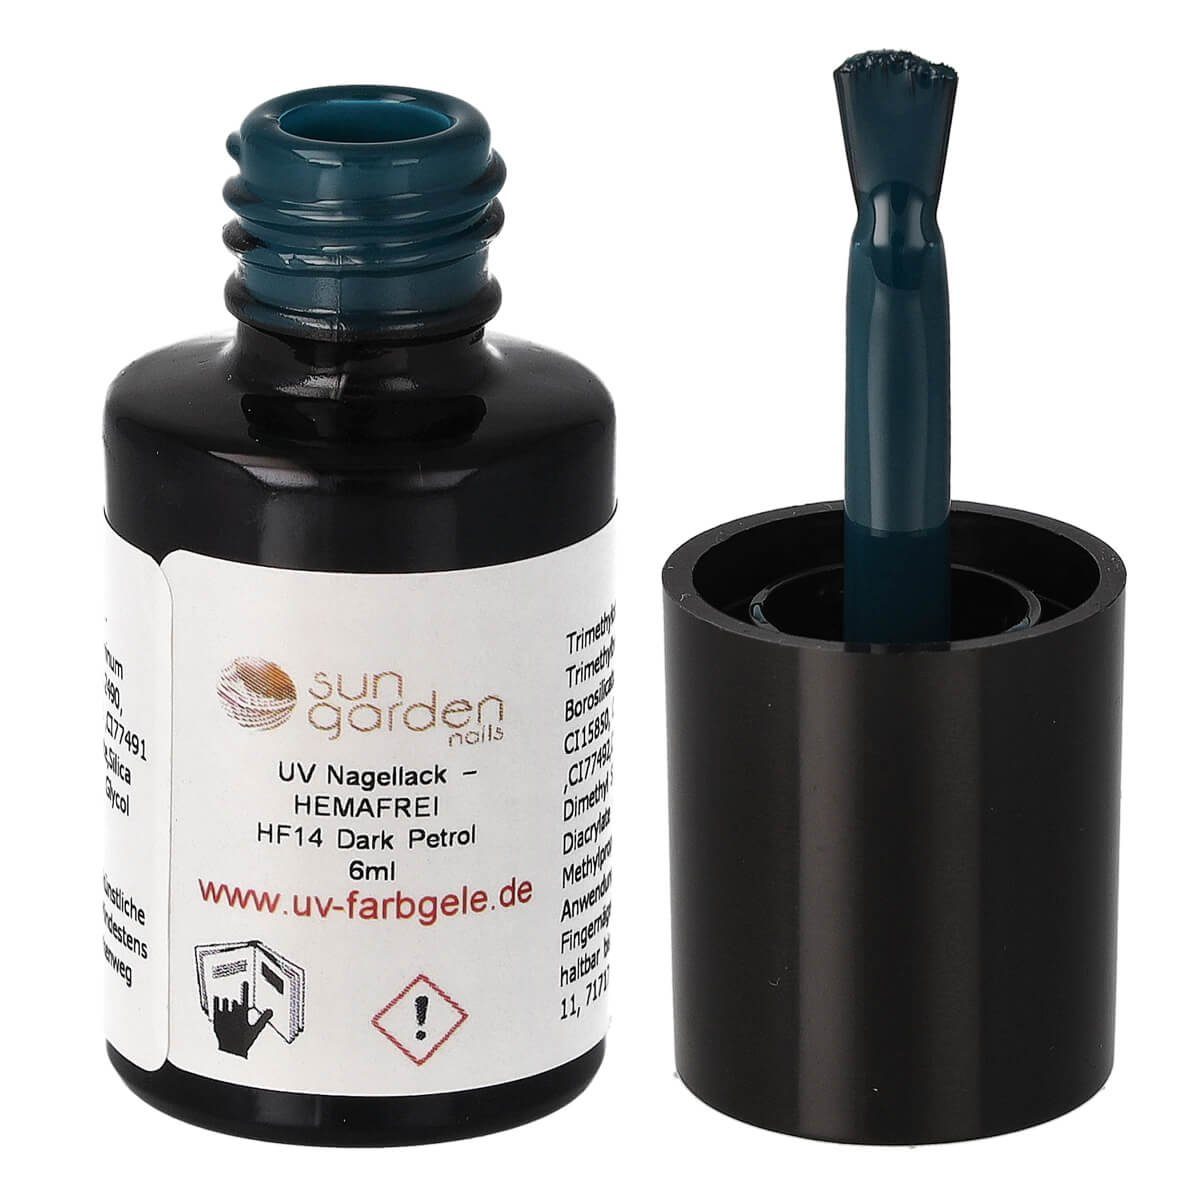 Sun Garden HF14 Nagellack Nails 6ml – Dark - UV Nagellack Petrol HEMAFREI